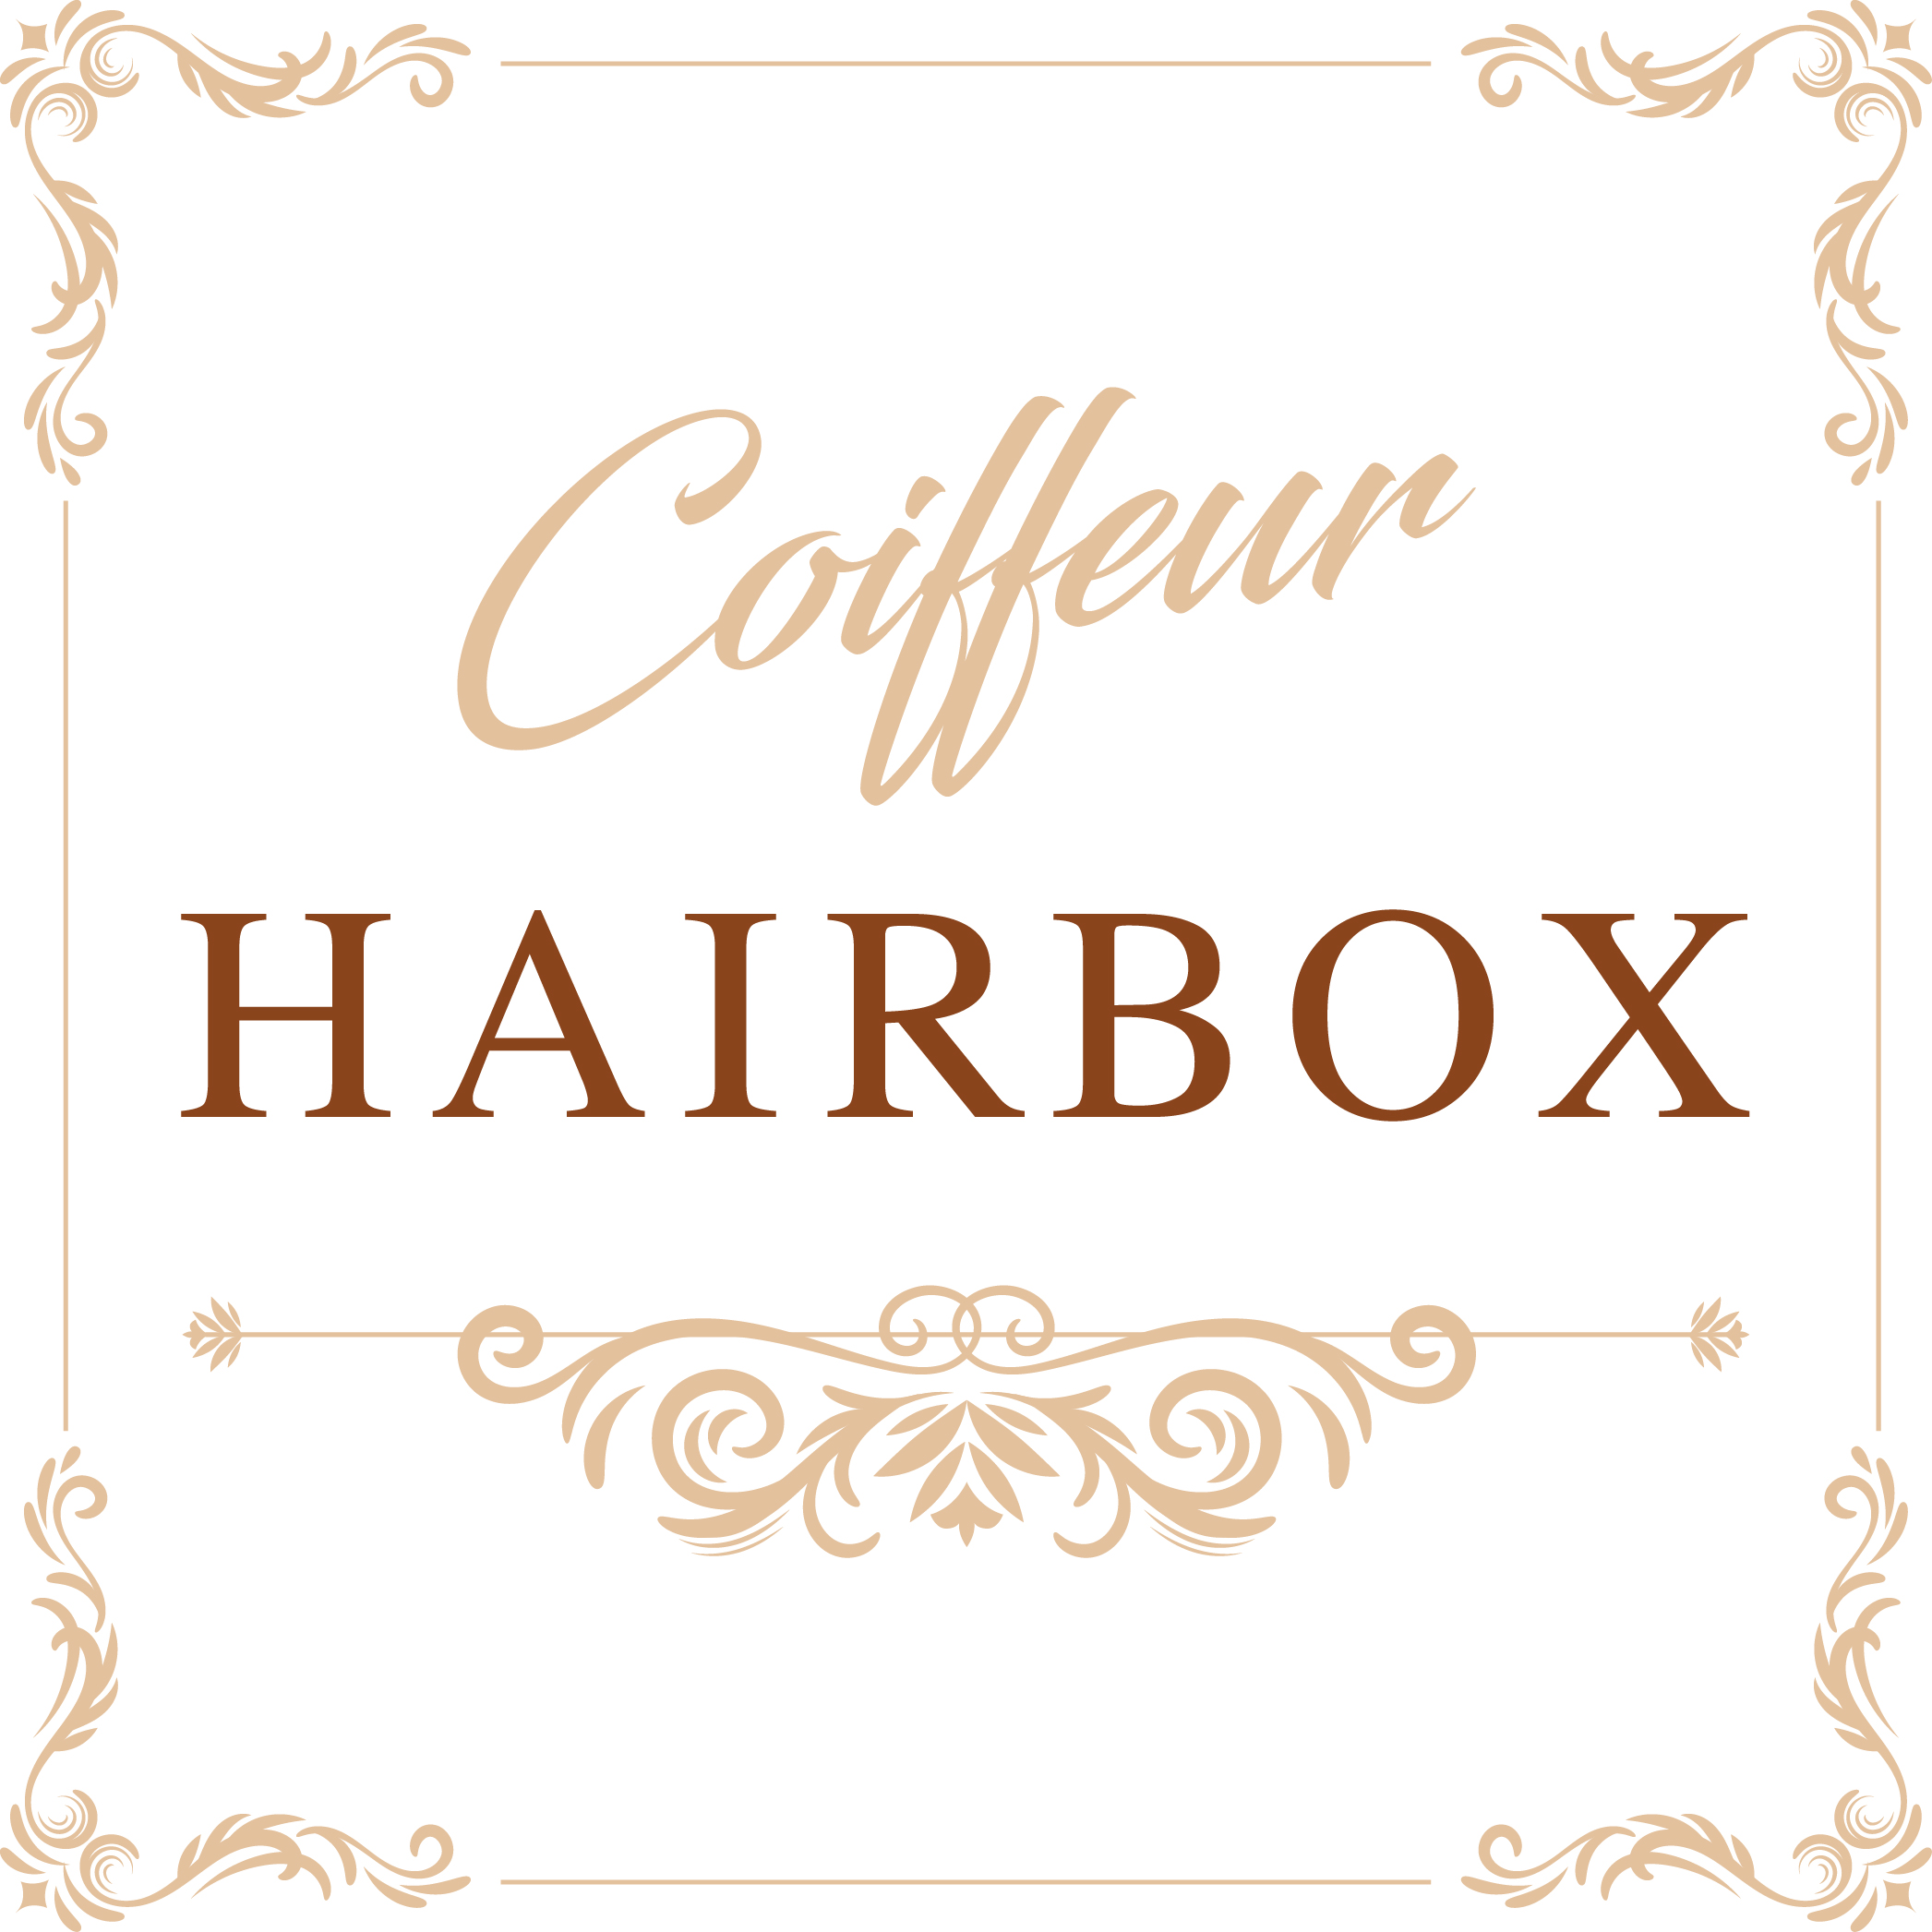 Coiffeur HairBox